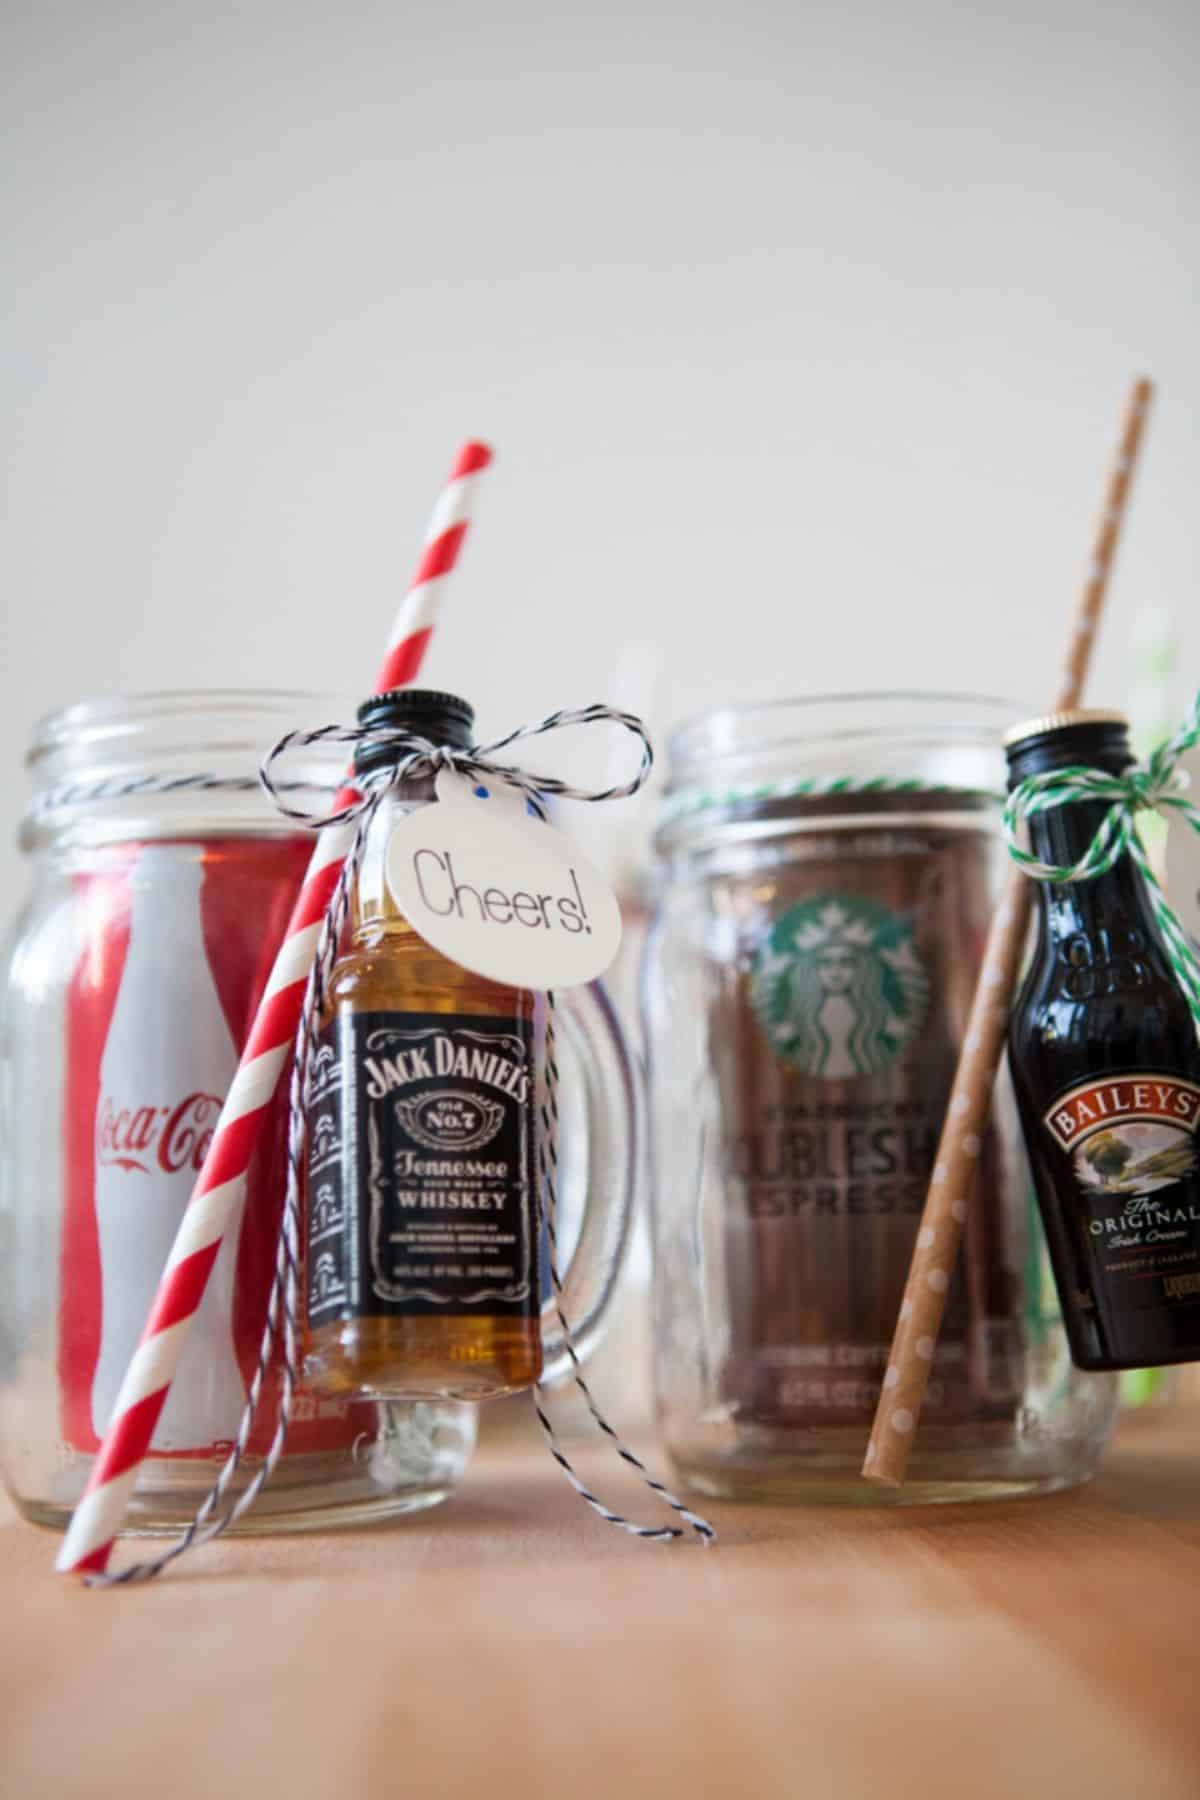 DIY Mason Jar Cocktail Gifts